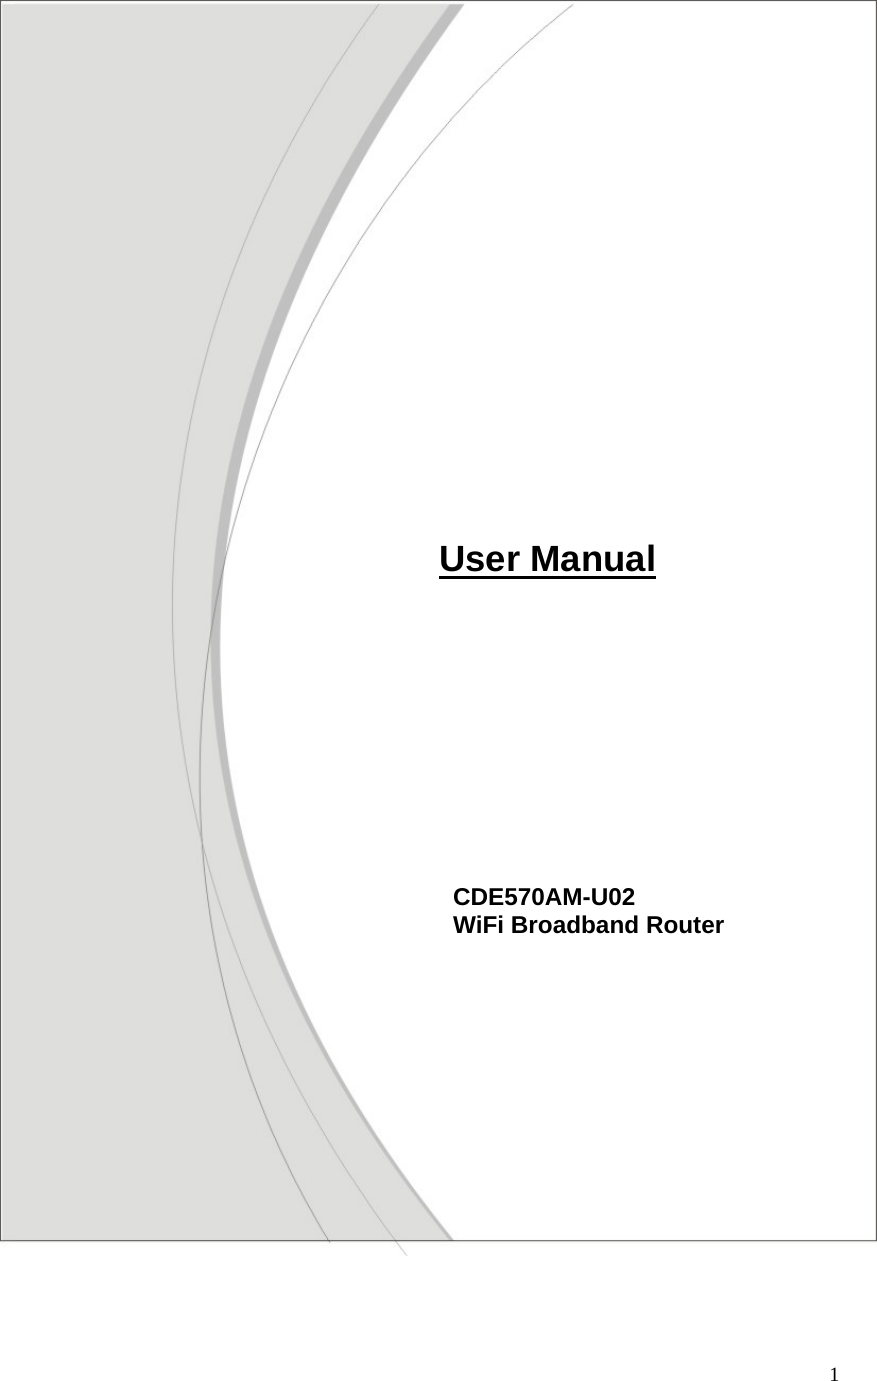  1                                            CDE570AM-U02  WiFi Broadband Router   User Manual 